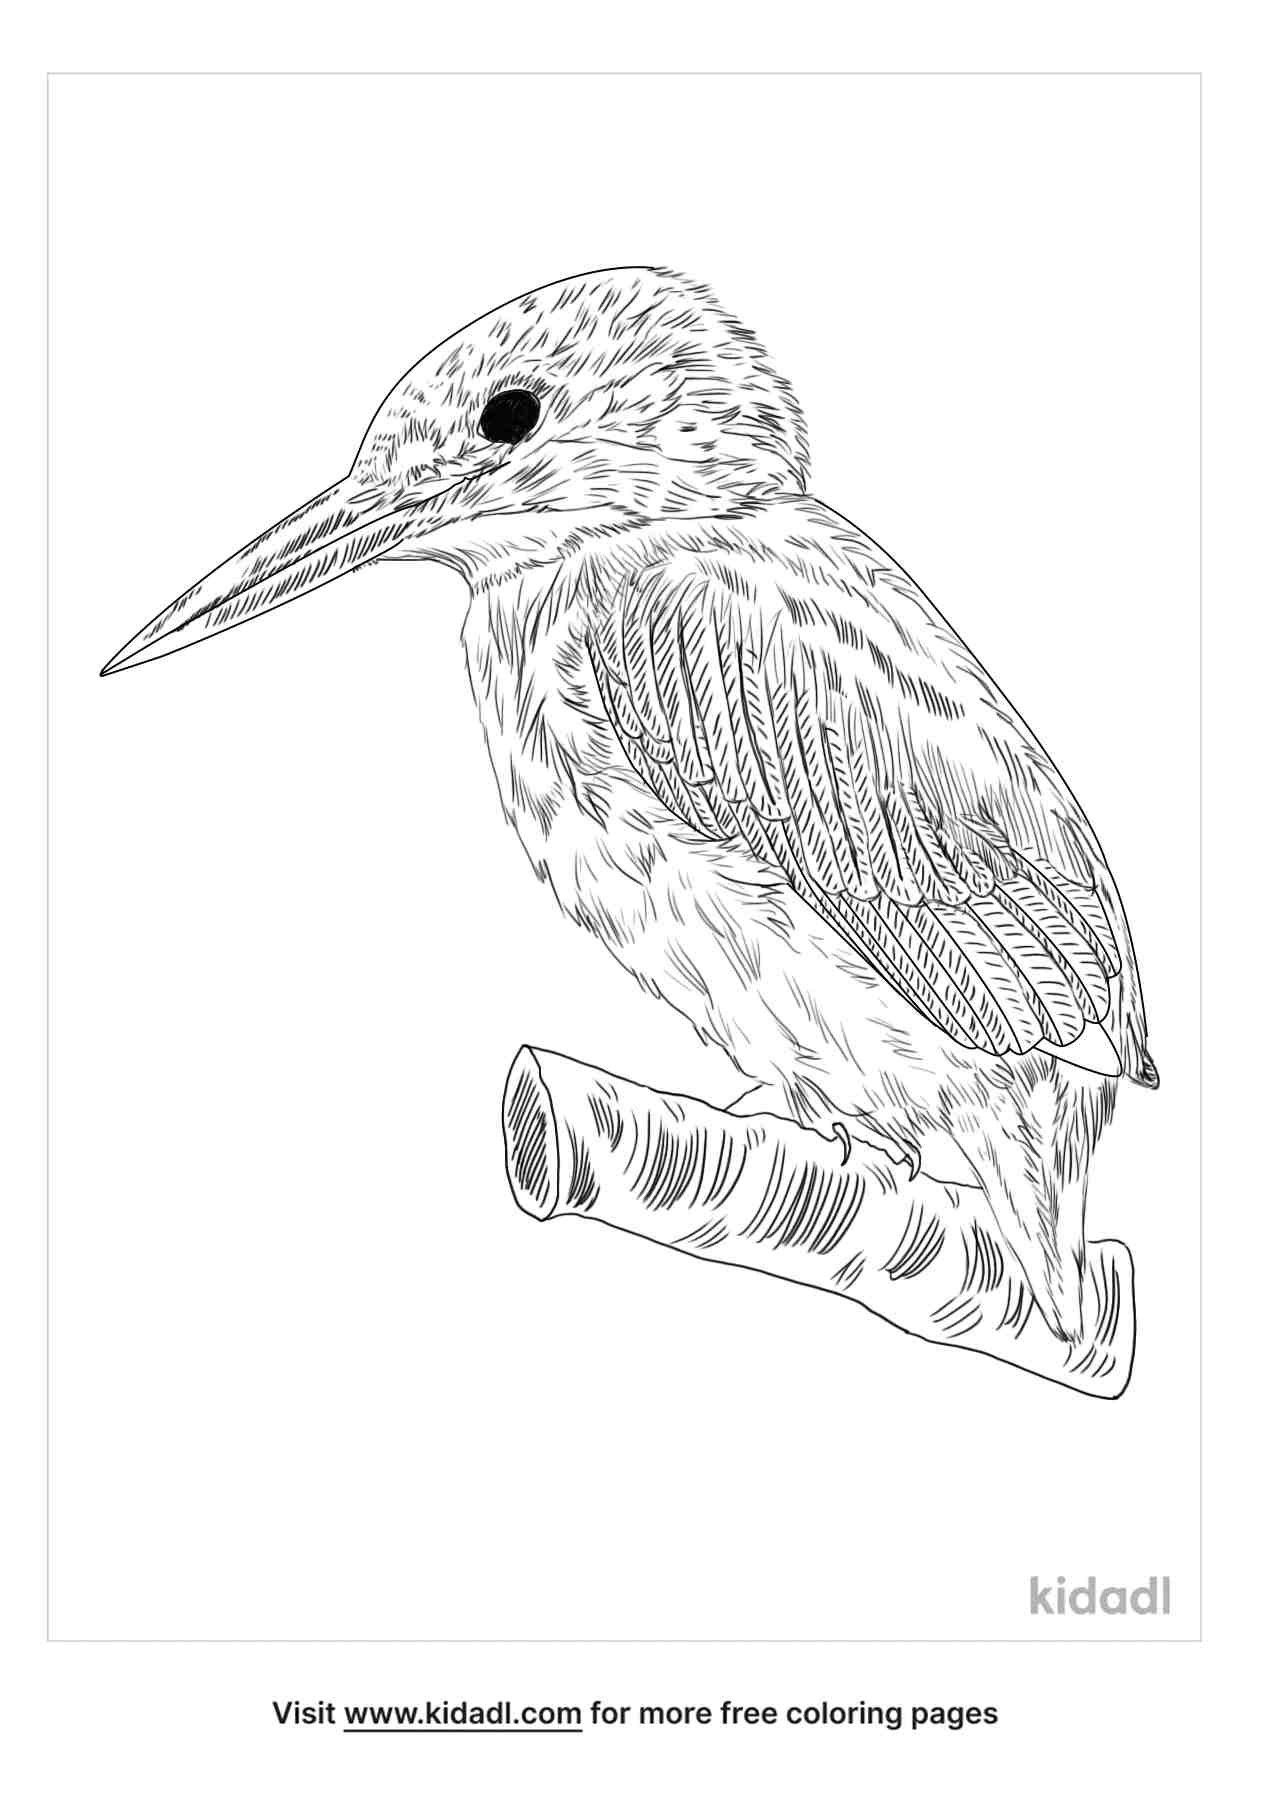 Enjoy coloring this Common Kingfisher bird.